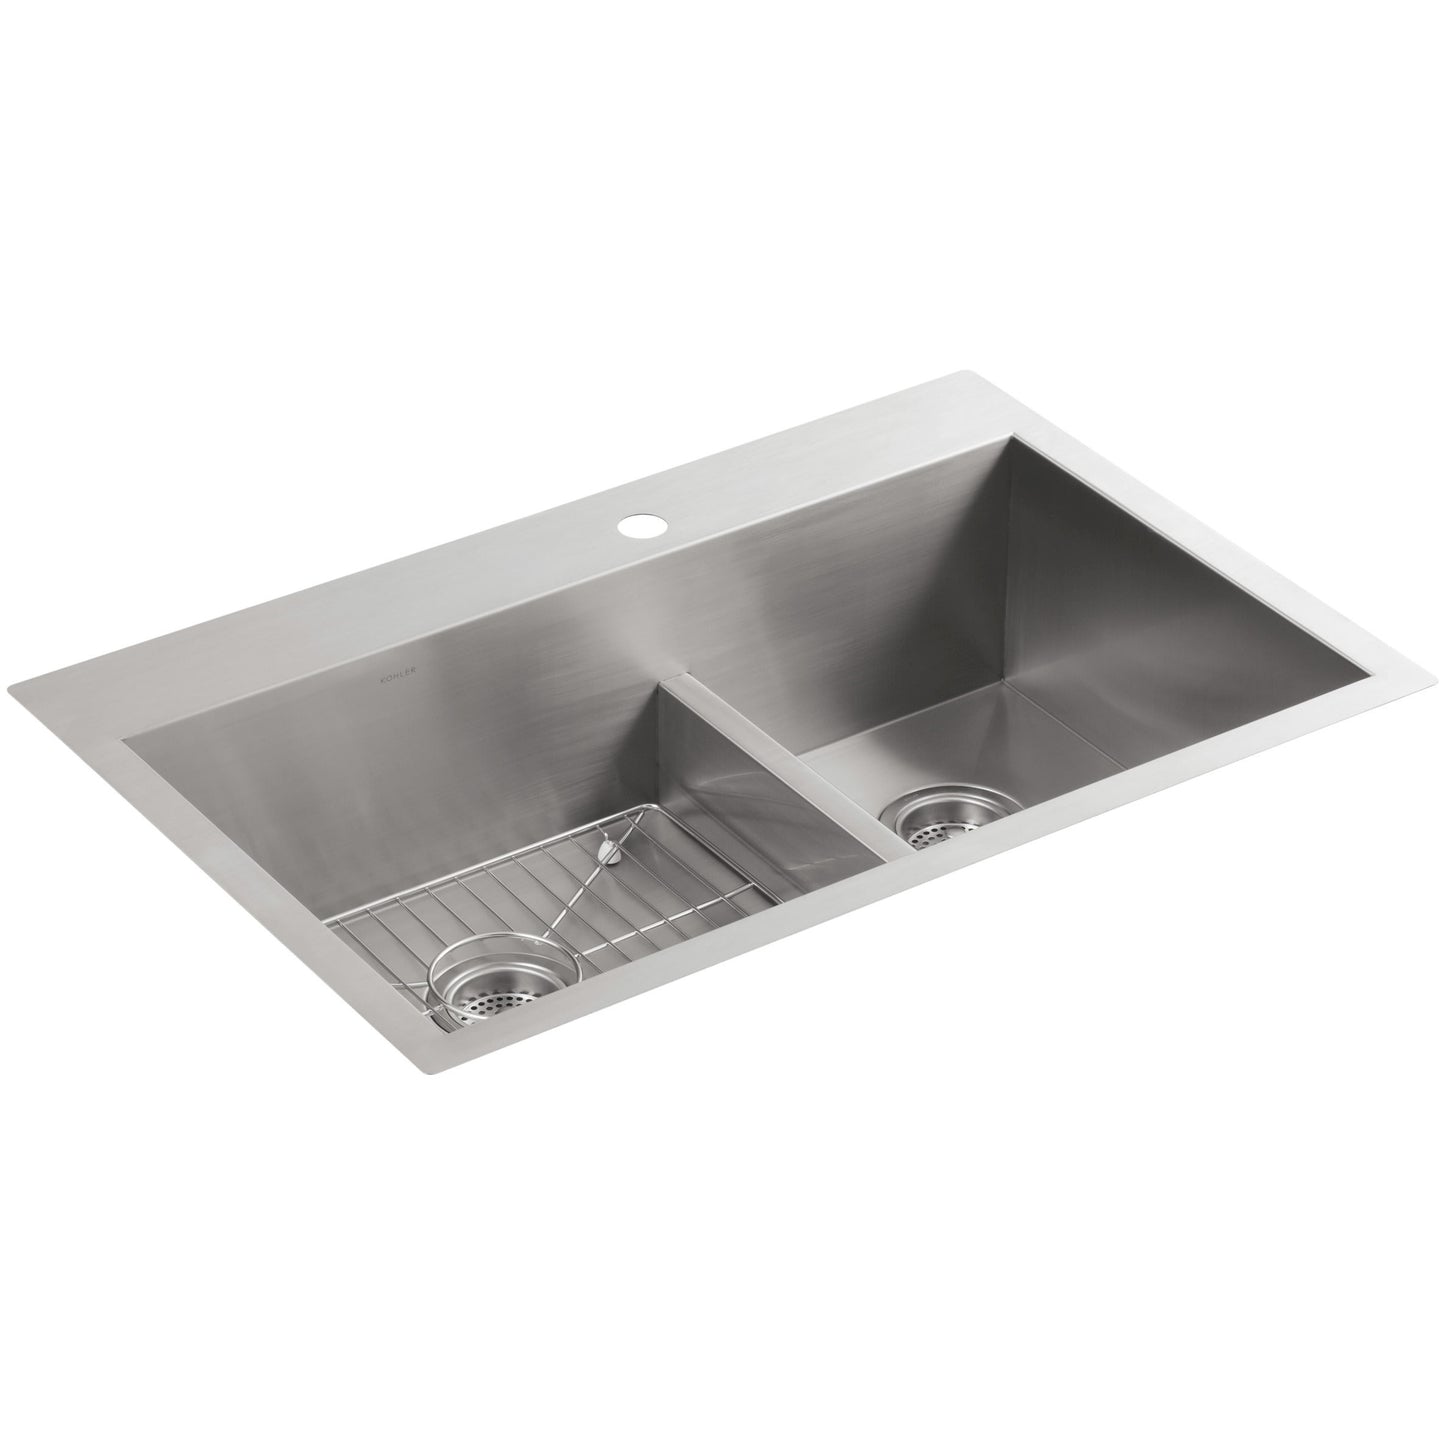 Kohler K-3839-1-NA - 33" x 22" Smart Divide Top Mount / Undermount Double Bowl Kitchen Sink, 1 Deck